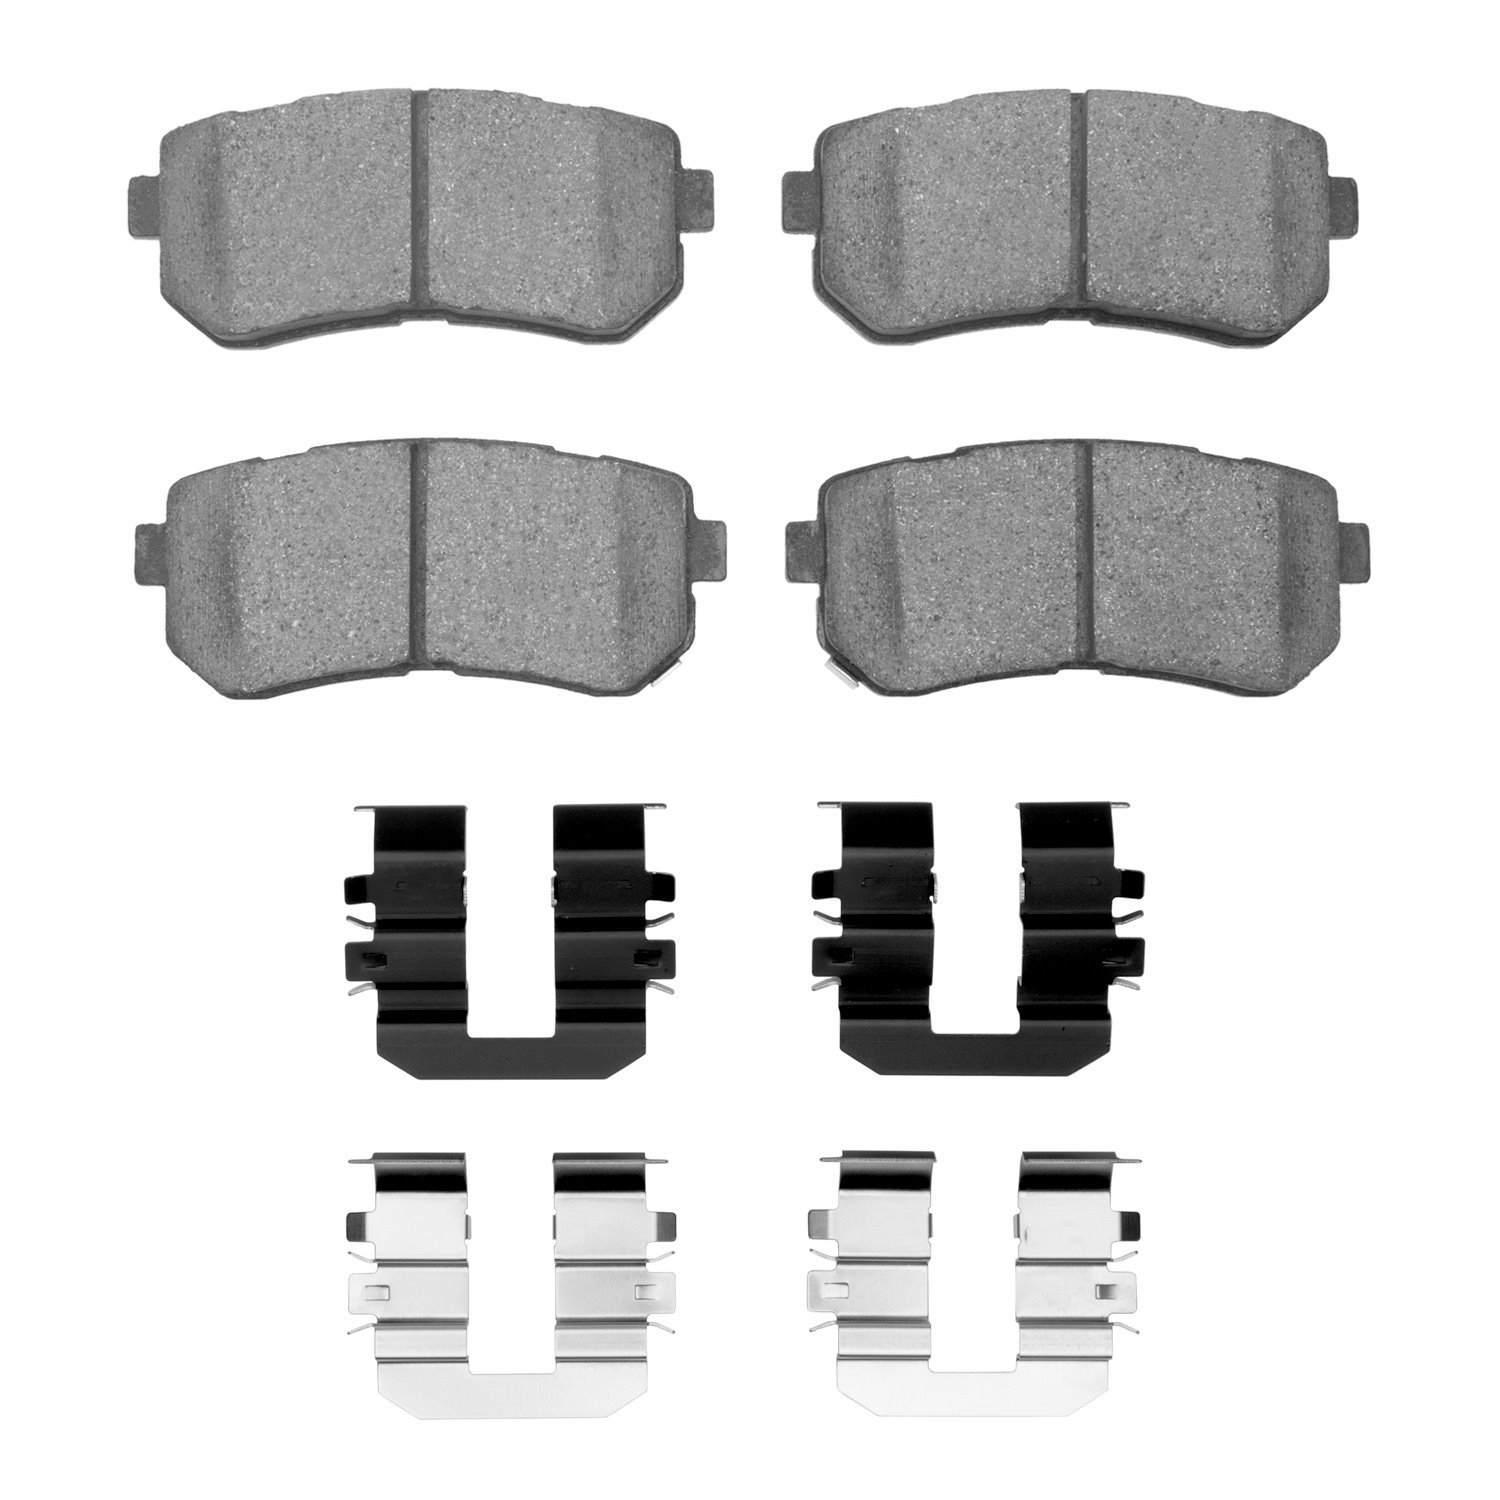 1310-1157-01 3000-Series Ceramic Brake Pads & Hardware Kit, 2006-2019 Multiple Makes/Models, Position: Rear